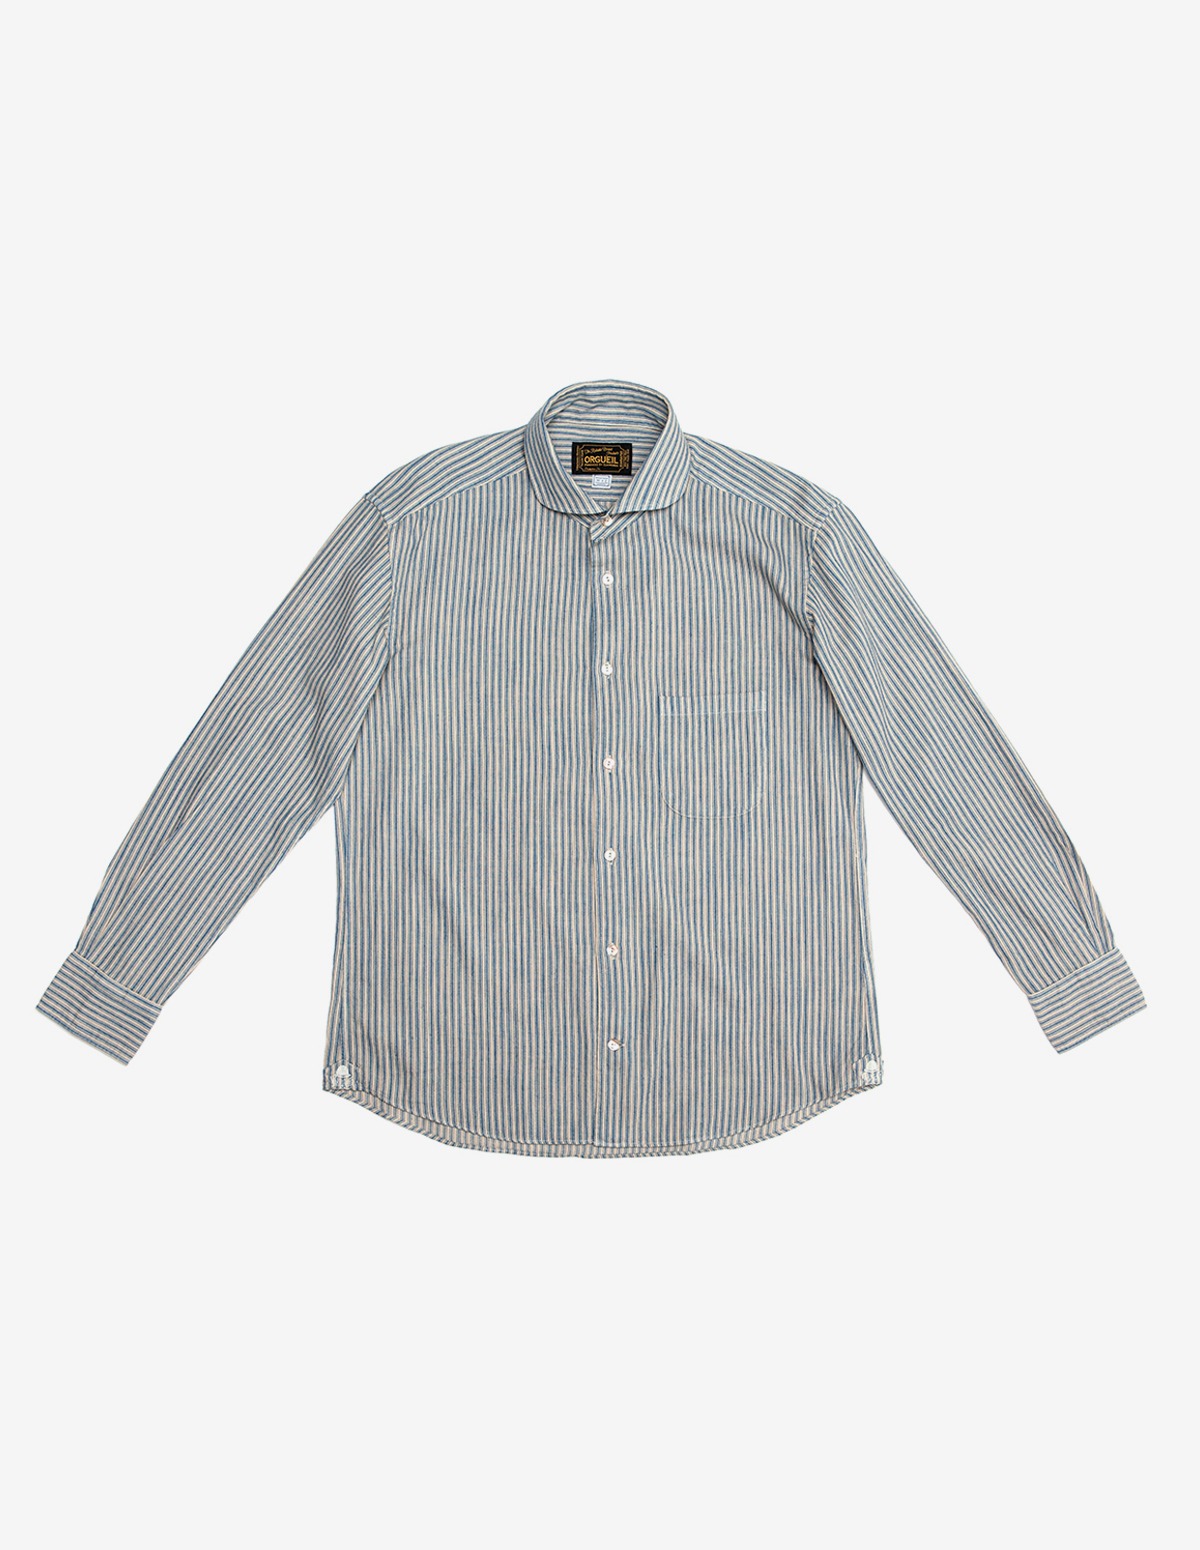 OR-5002B Windsor Collar Shirt